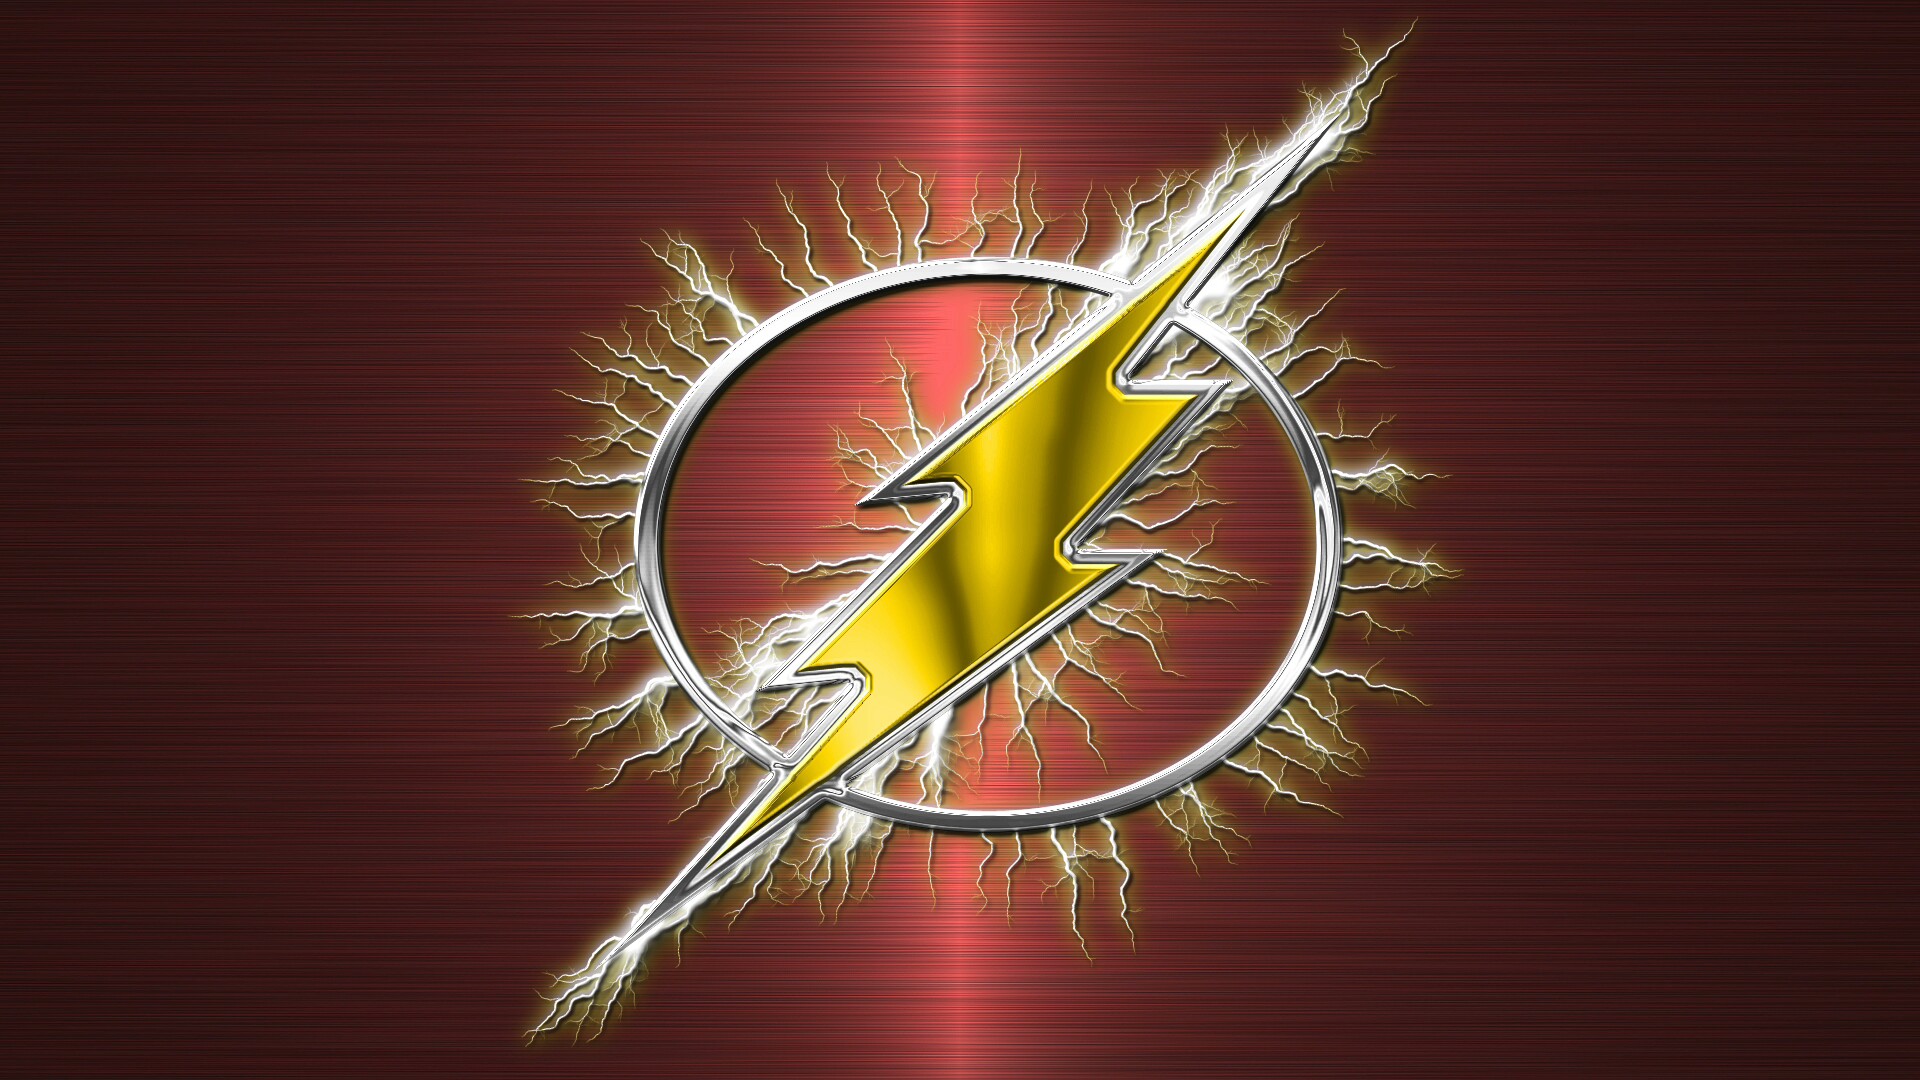 The Flash Logo Wallpaper 1920x1080